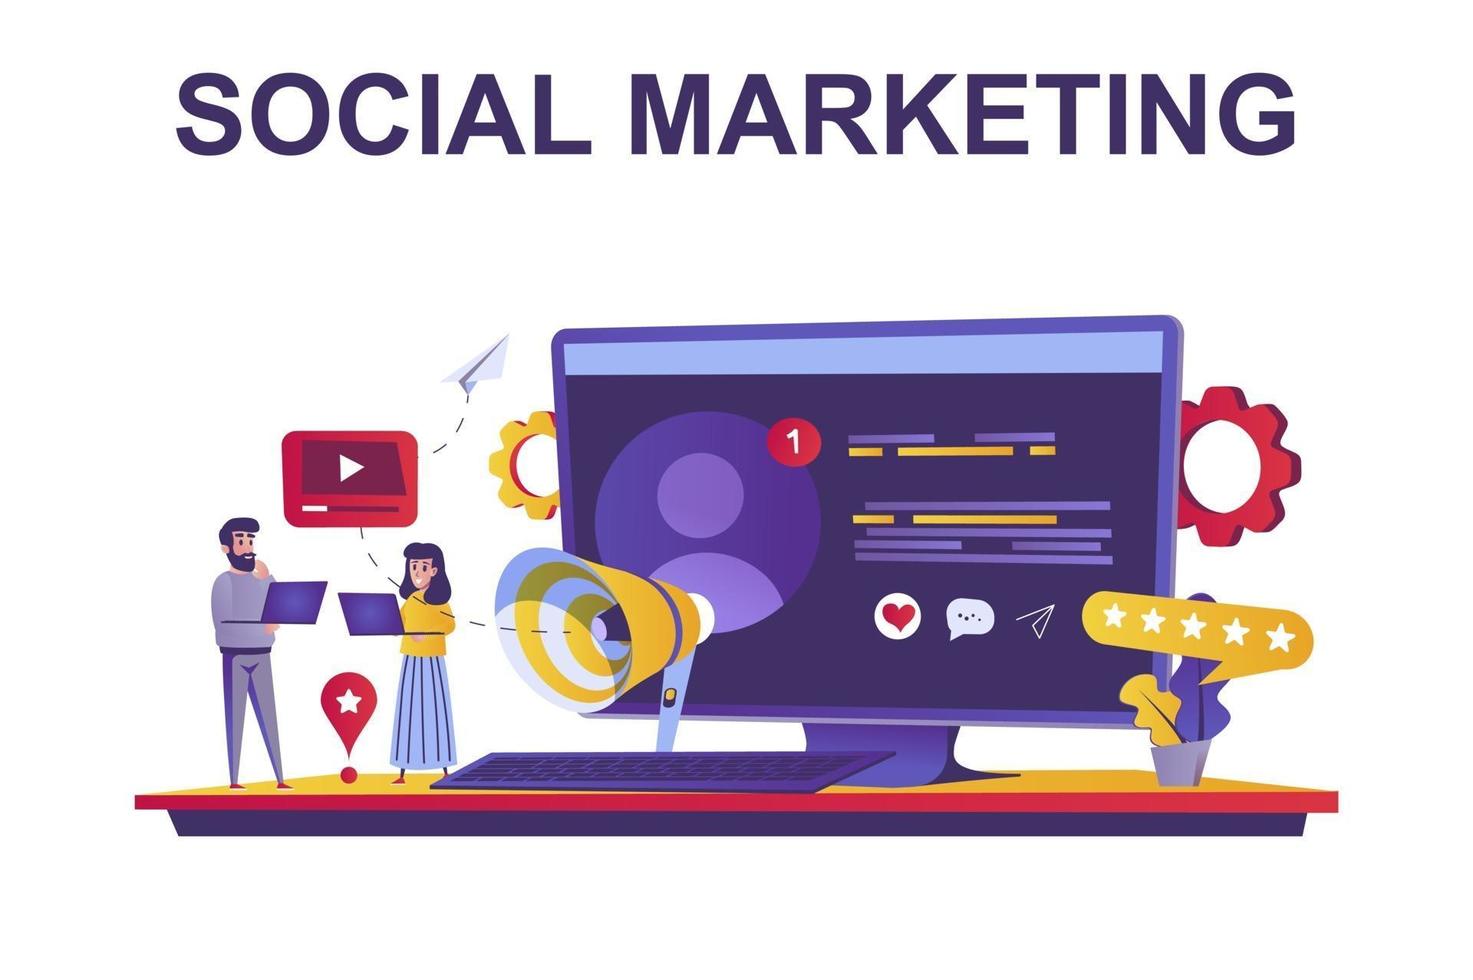 sociale marketing webconcept in vlakke stijl vector